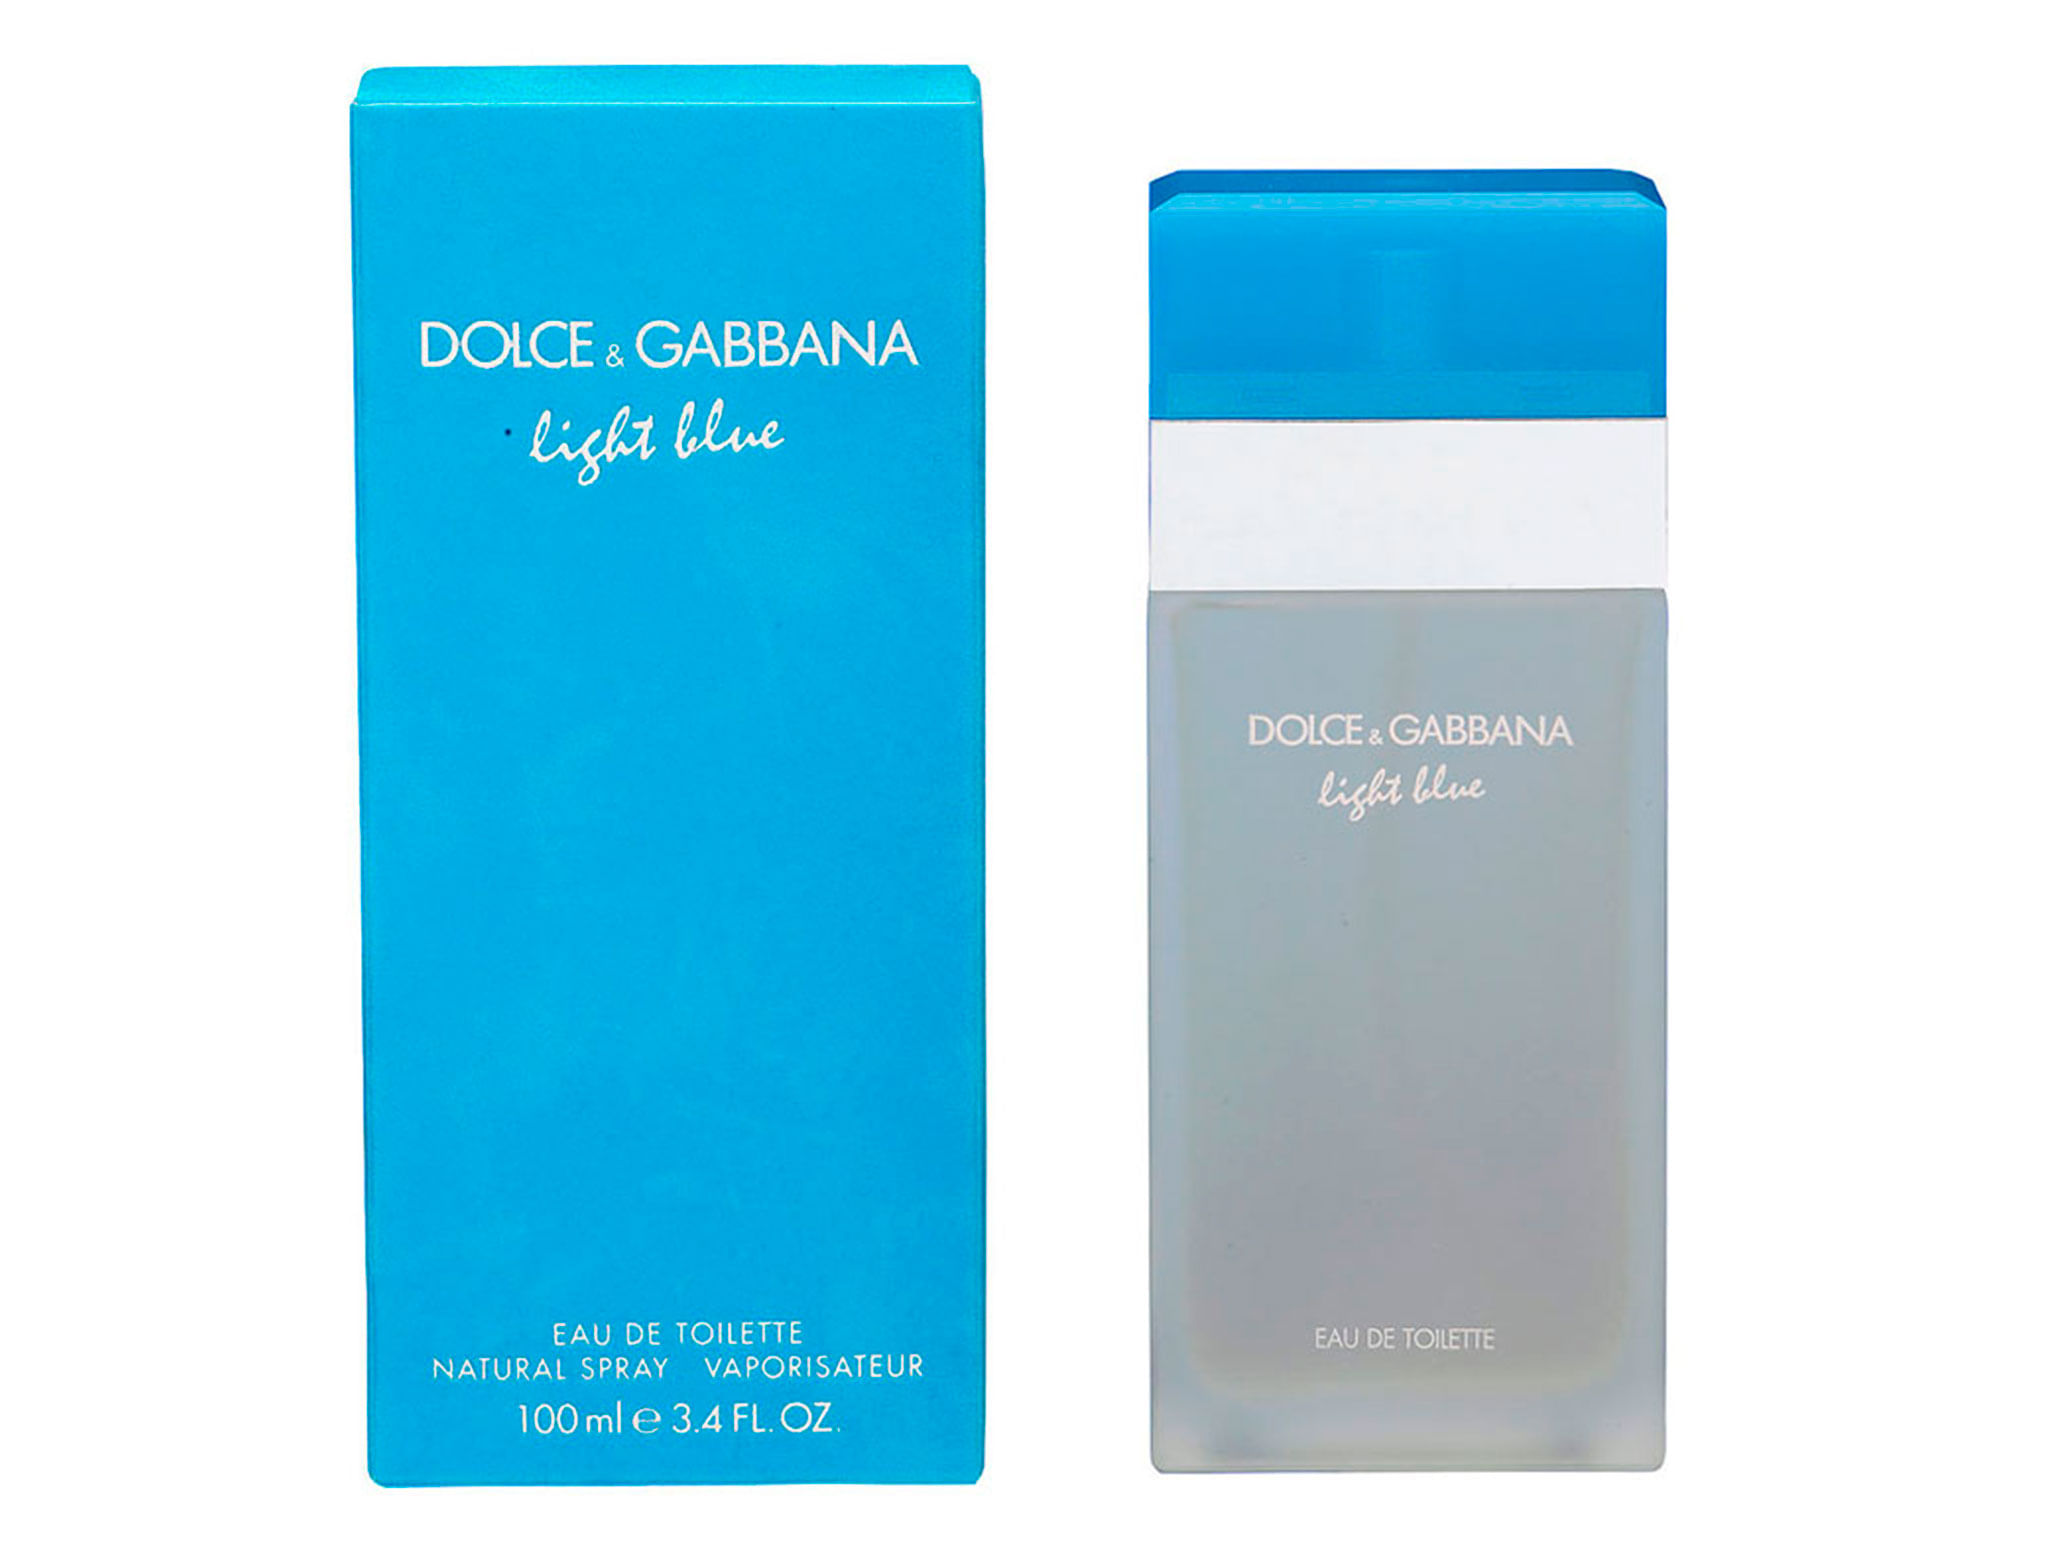 Dolce gabbana light blue 100. Light Blue Dolce Gabbana 50ml. \Men Light Blue Dolce Gabbana 100 мл. Дольче Габбана Лайт Блю 100 мл. D&G Light Blue EDT for women 100 ml.